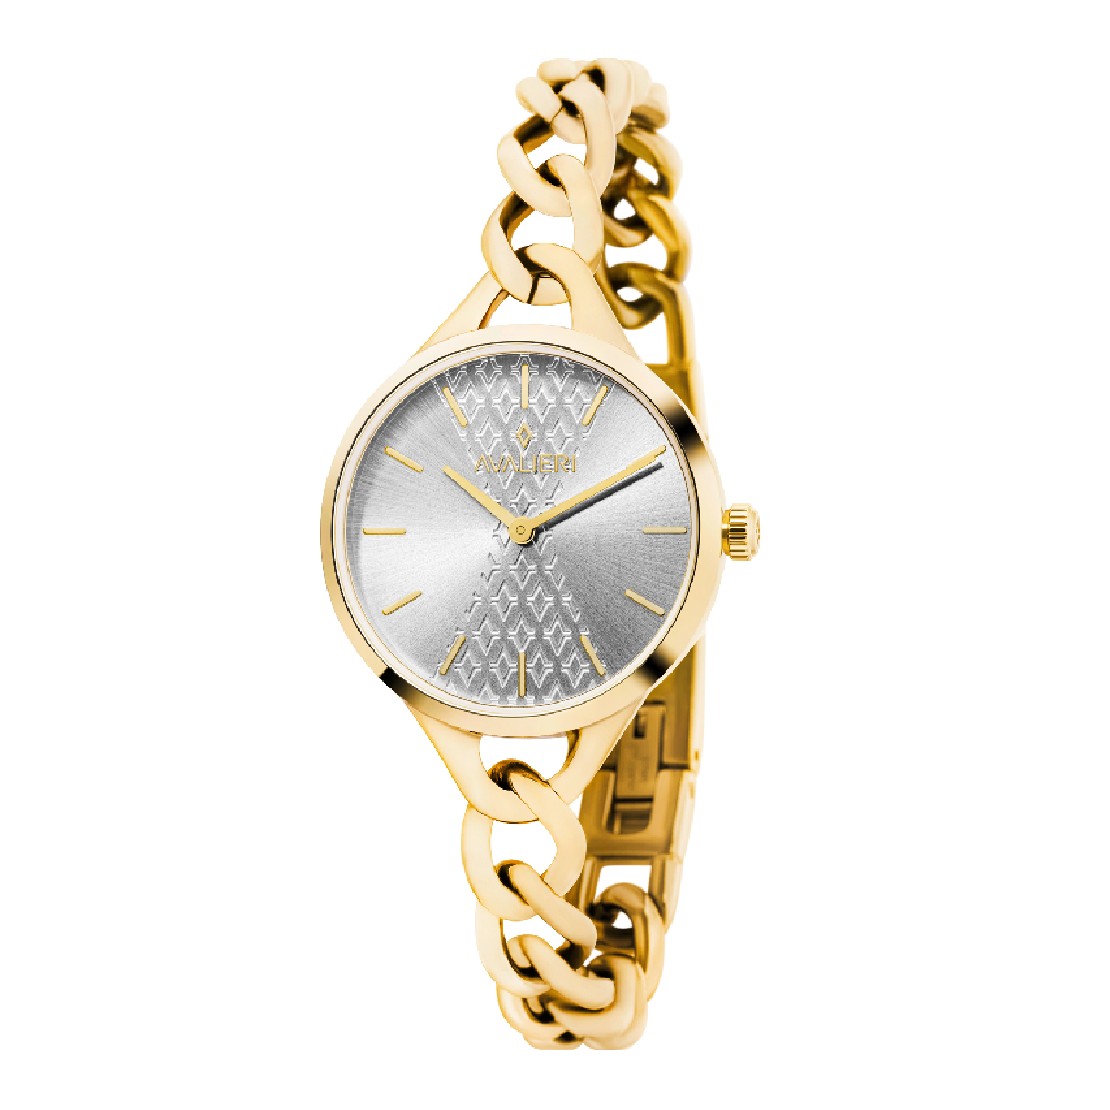 Avalieri Women's Quartz Watch Silver Dial - AV-2333B